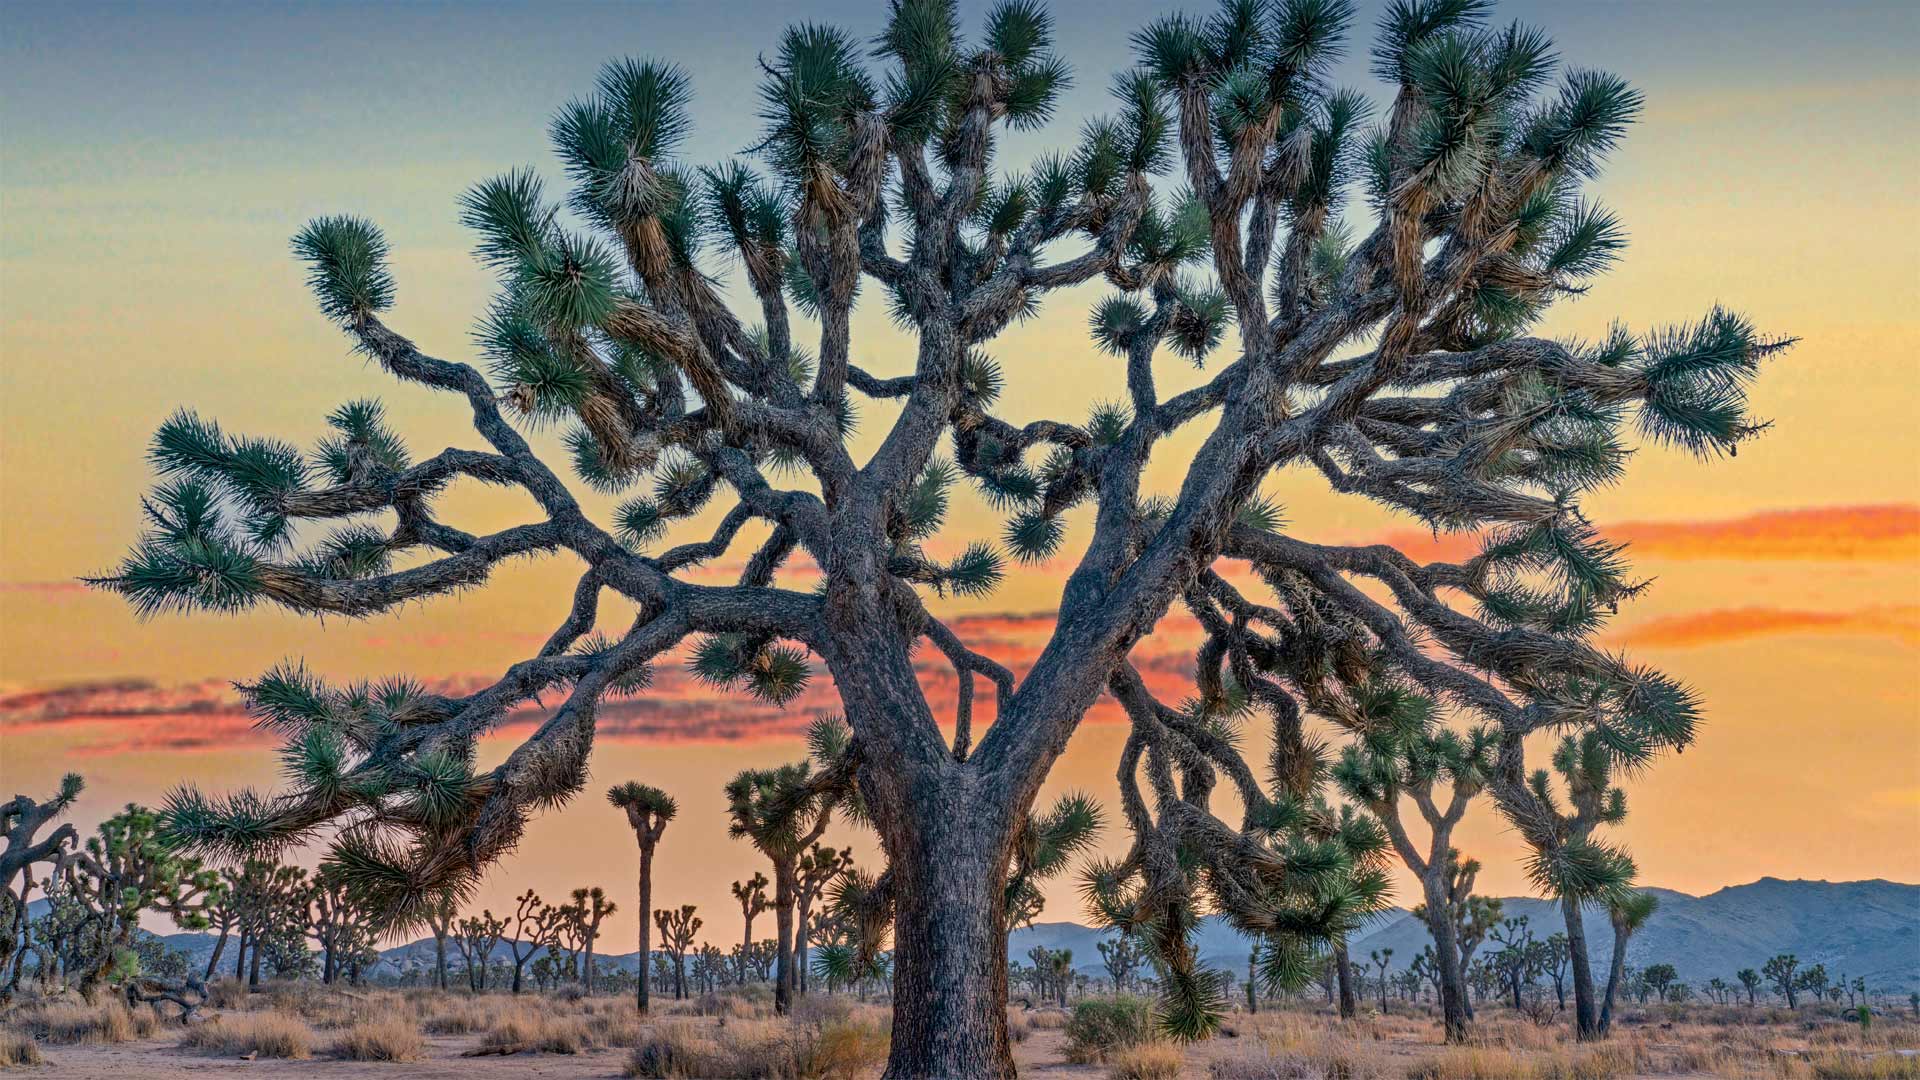 Joshua trees in Joshua Tree National Park, California - Tim Fitzharris